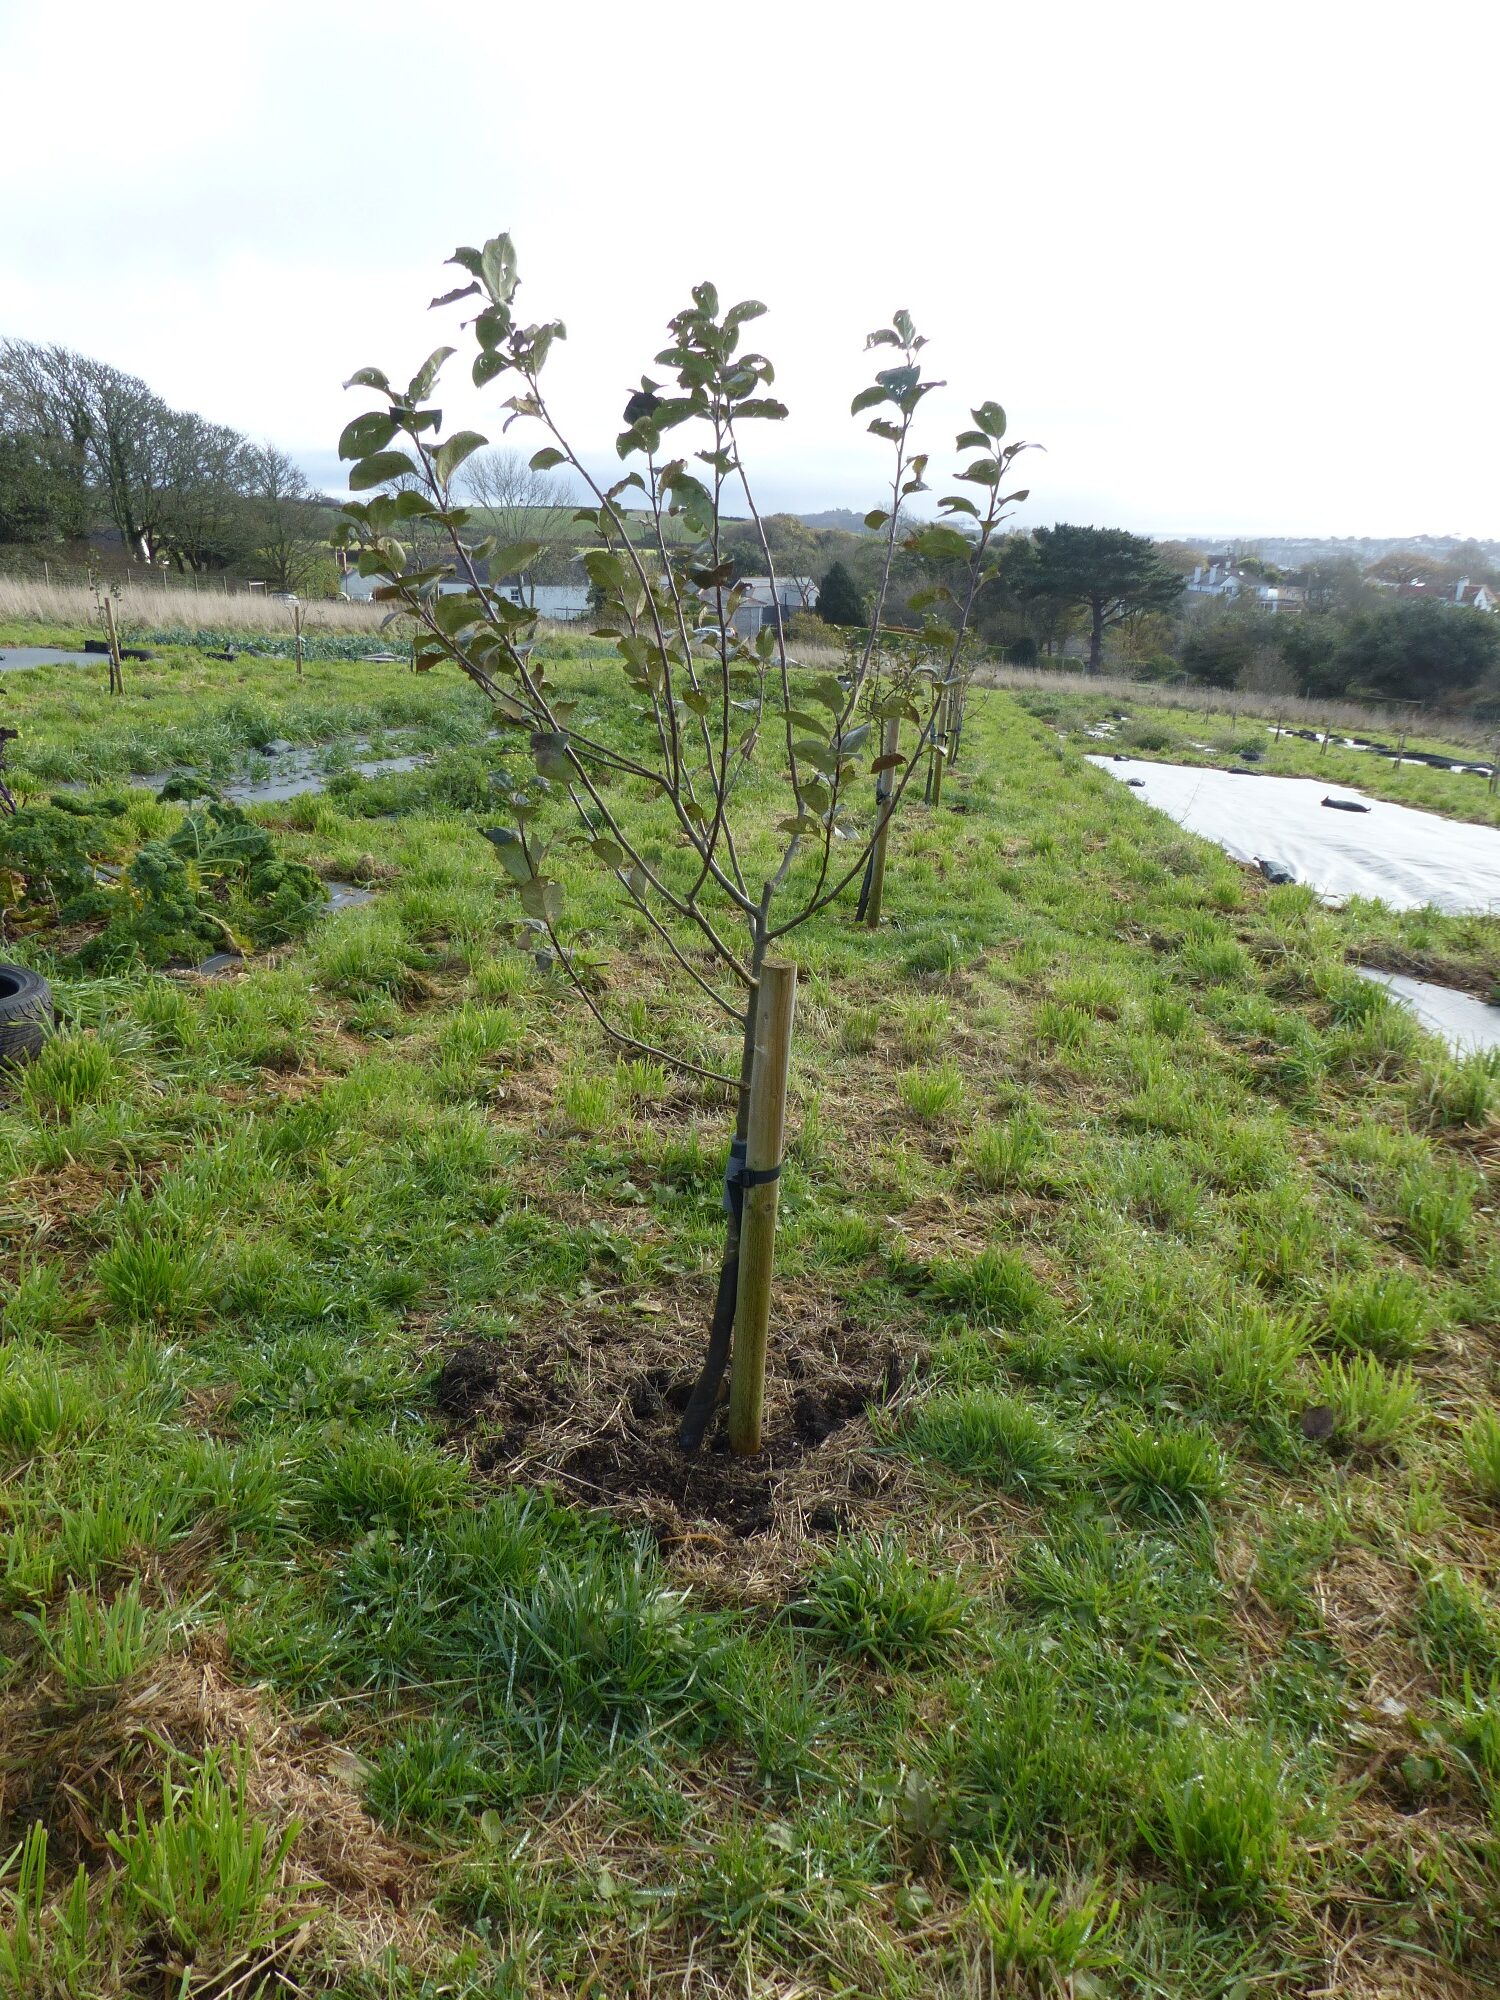 Newly-planted Cornish apple tree